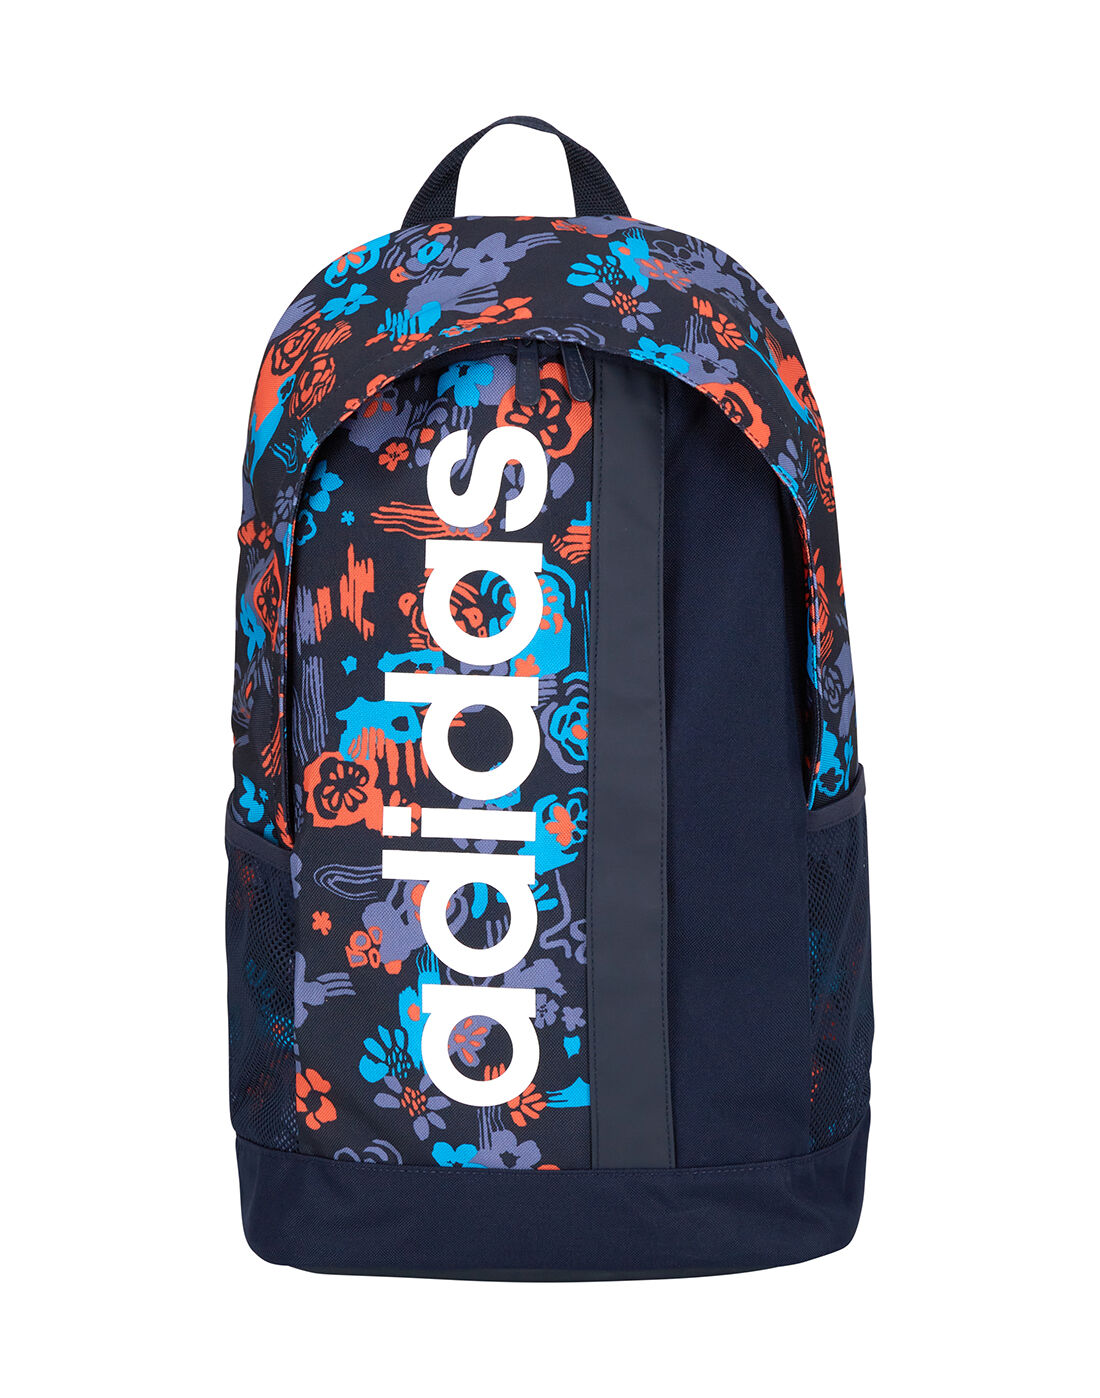 adidas floral school bags